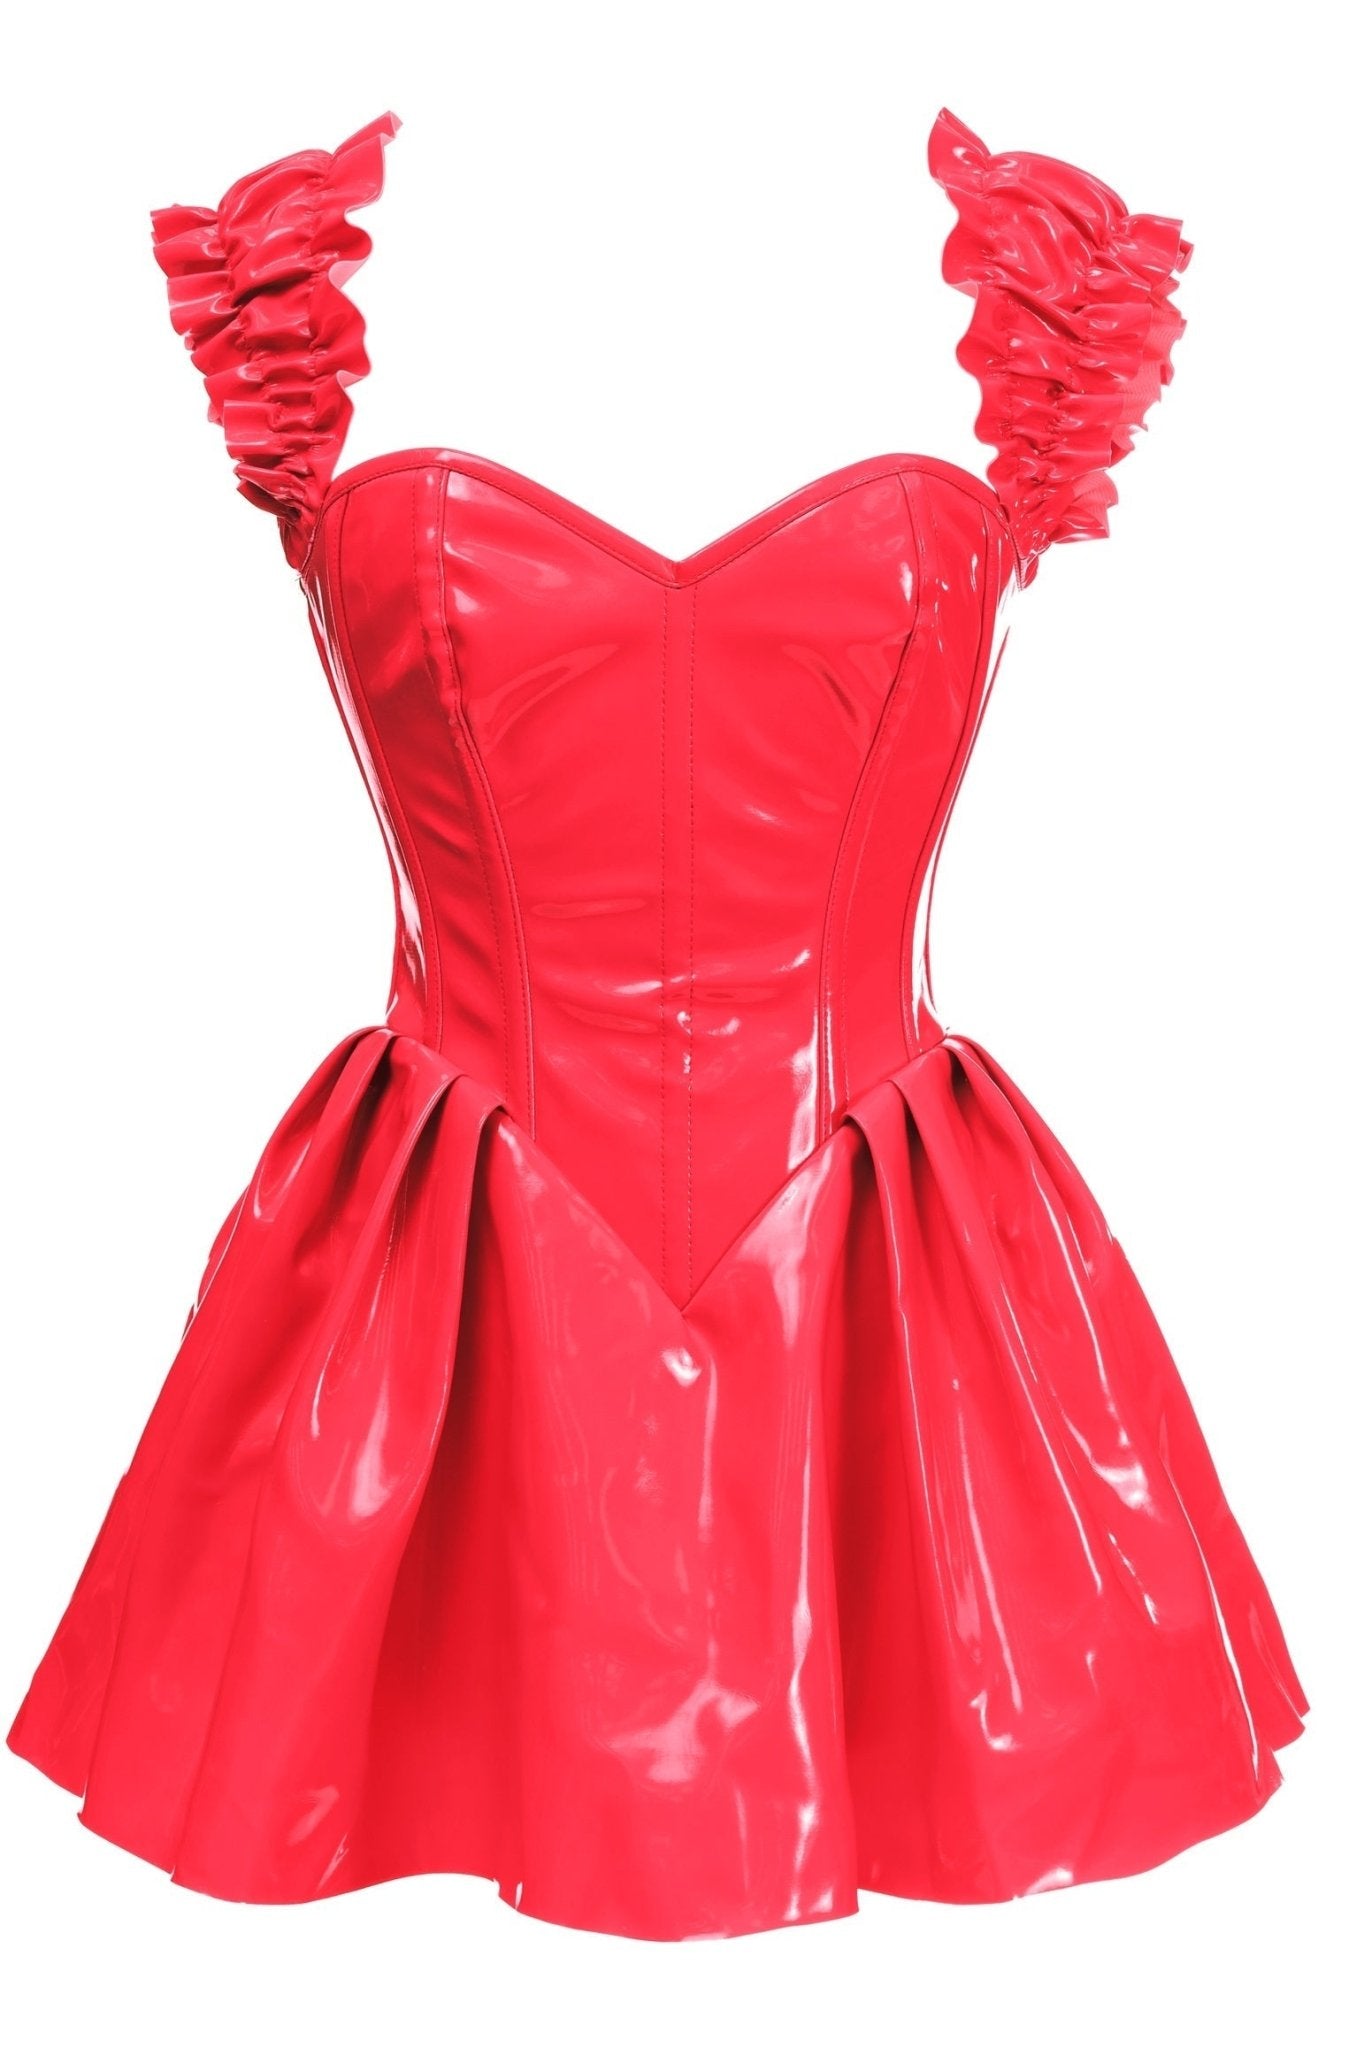 Luxurious Steel-Boned Glossy Red Vinyl Corset Dress Musotica.com